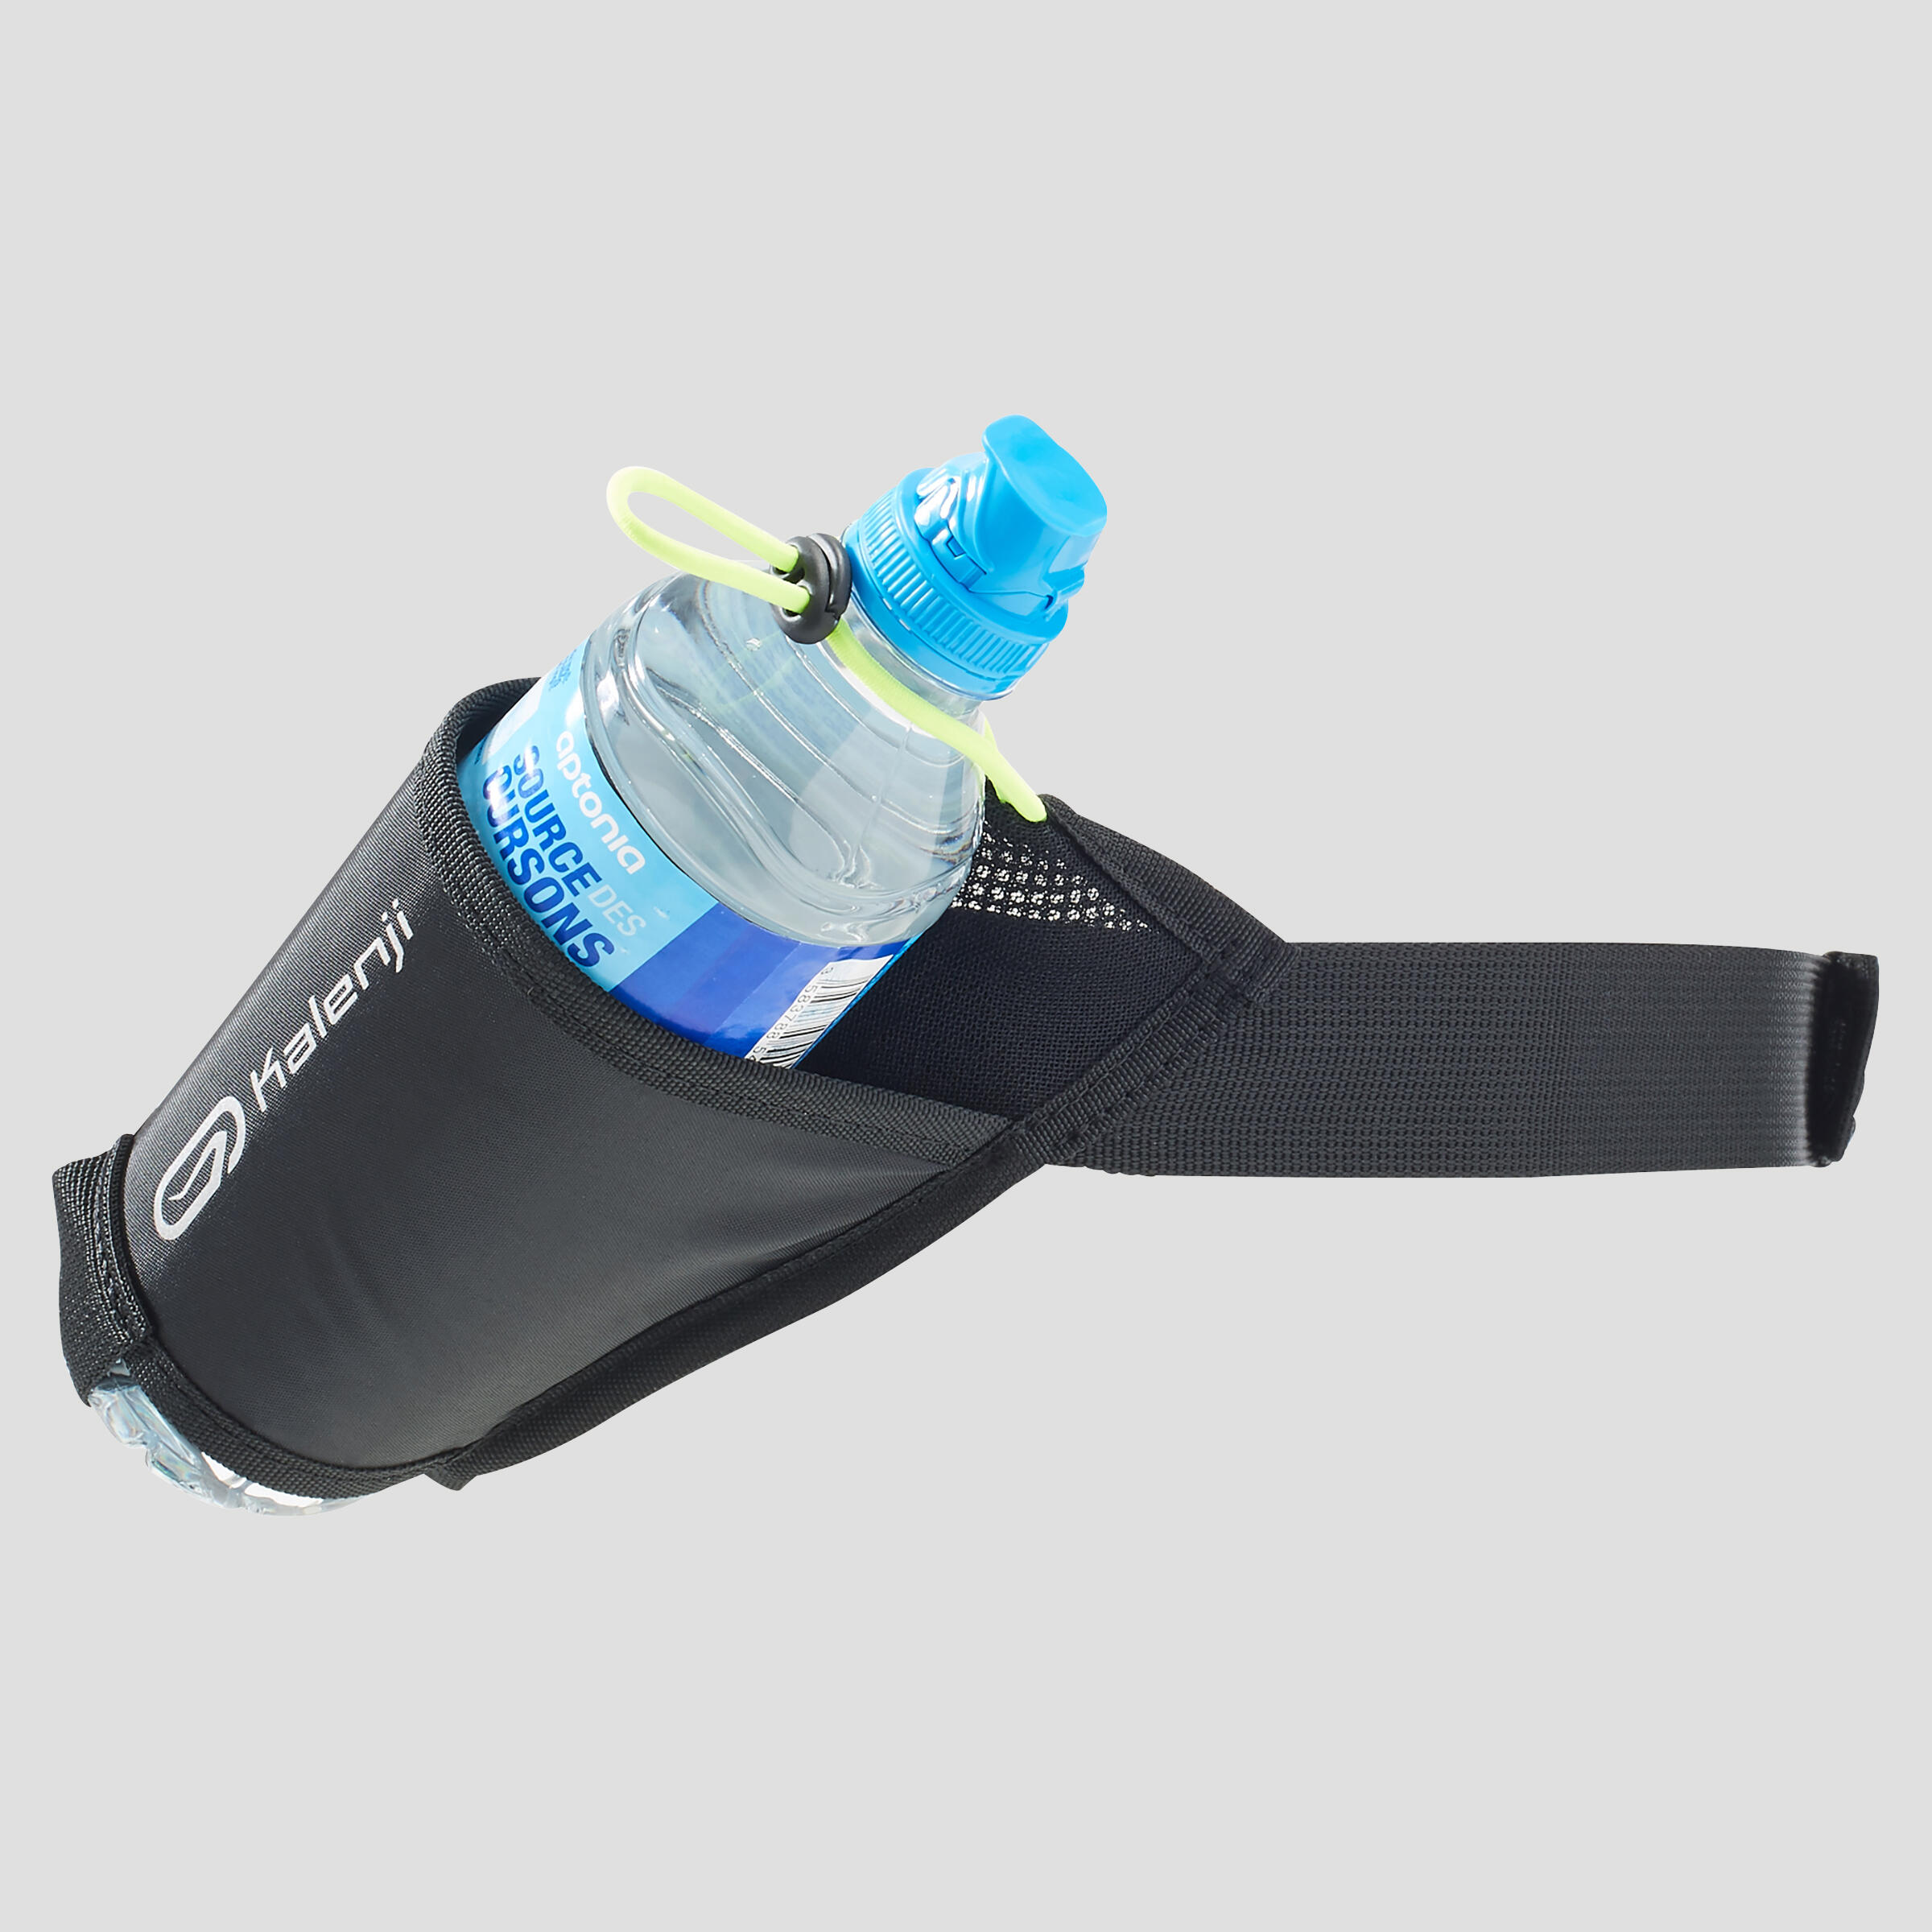 decathlon water bottle carrier